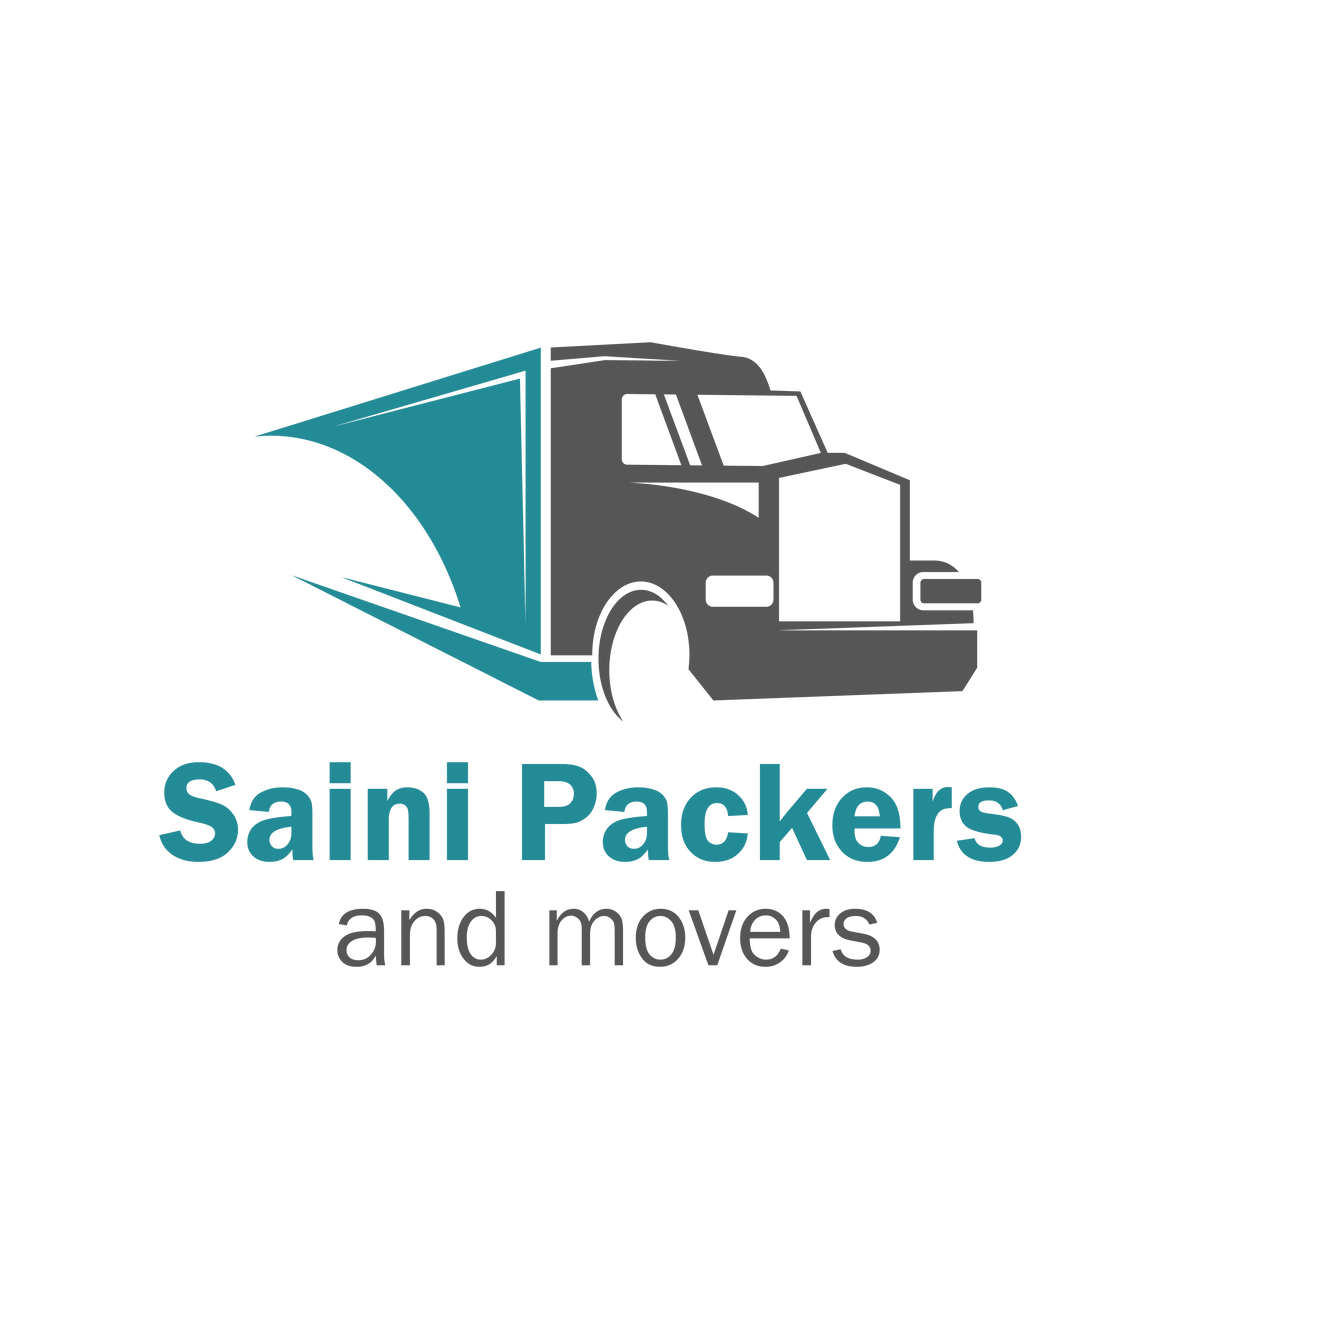 saini packers and movers logo